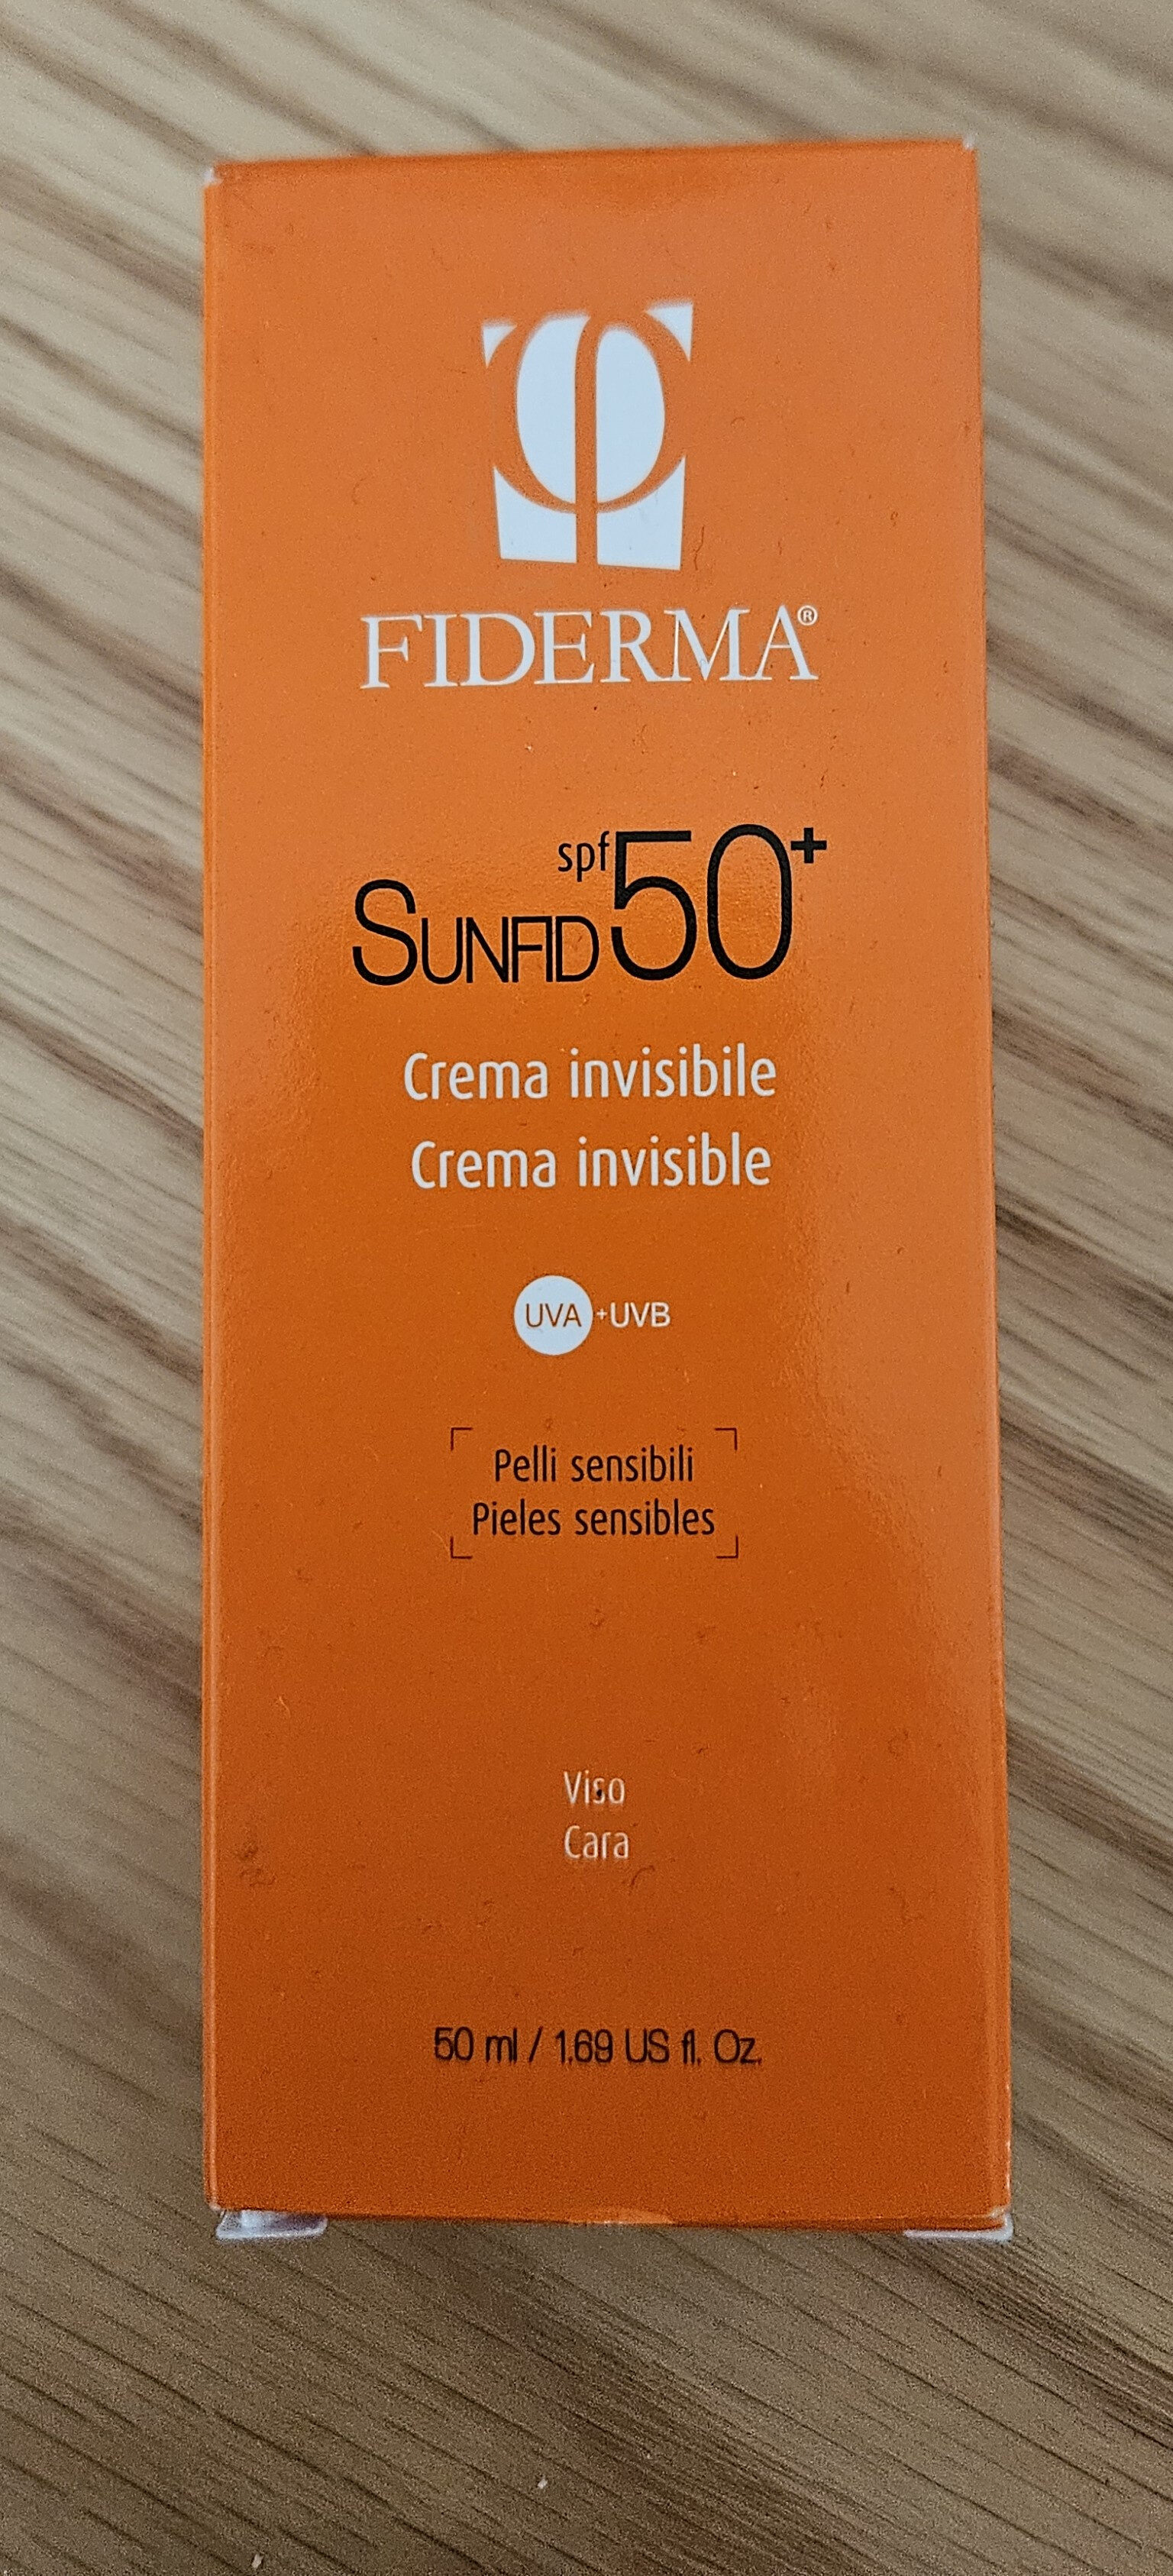 Sunfid spf50+ - Produto - en